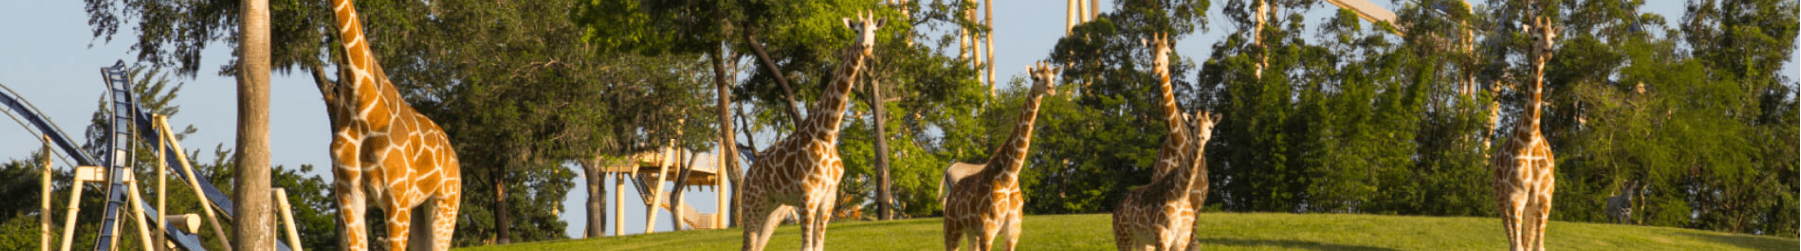 See the Giraffe at Busch Gardens Tampa Bay